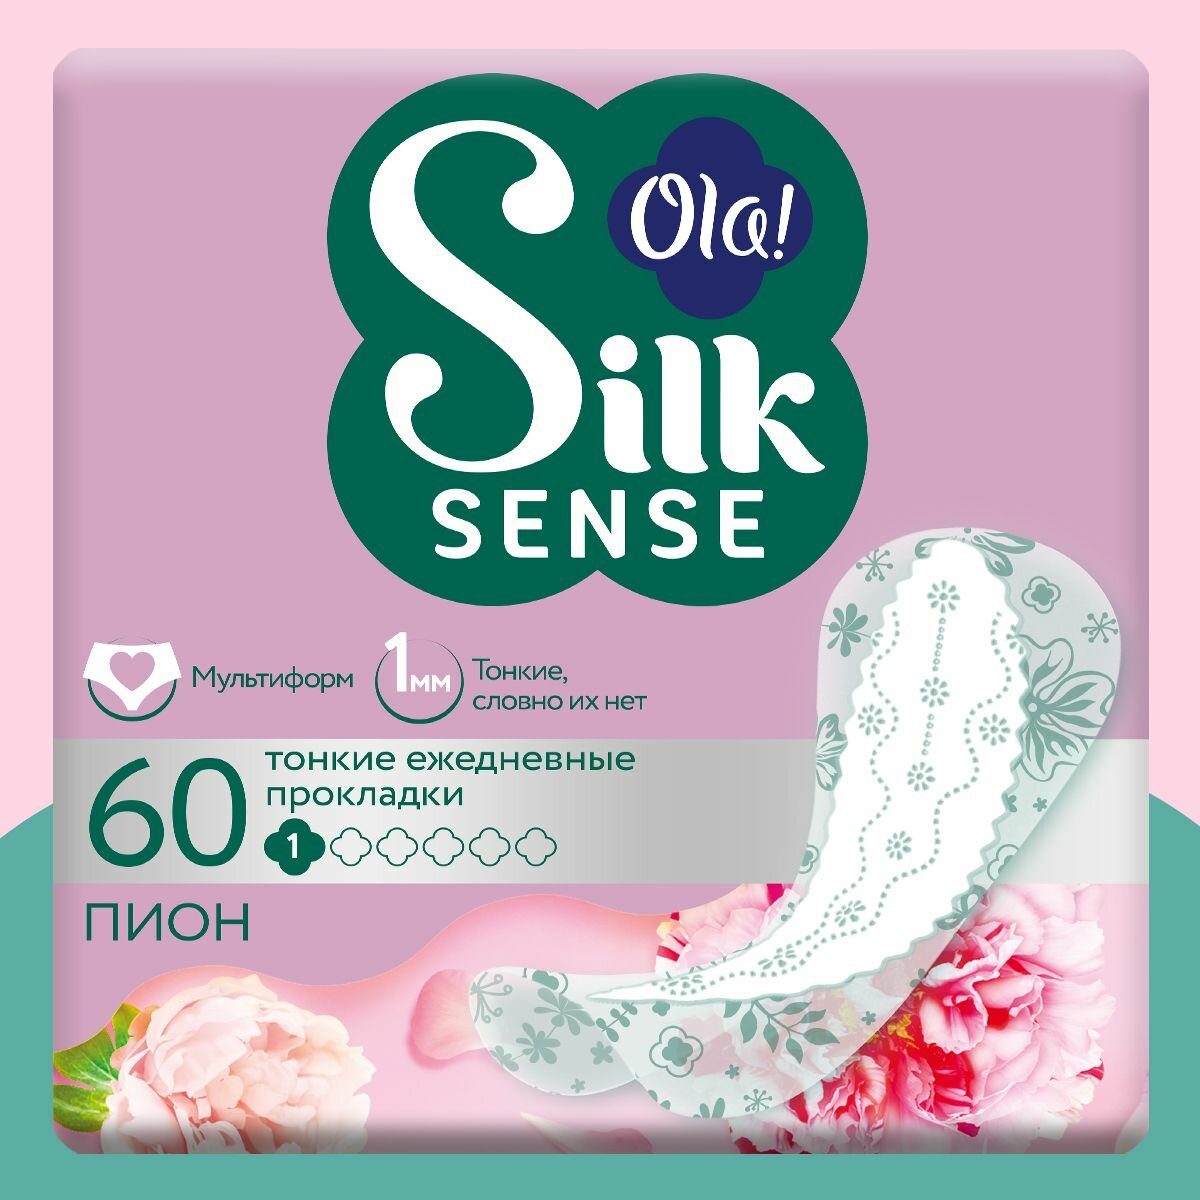 Ежедневные прокладки мультиформ Ola! Silk Sense Light, аромат Белый пион, 60 шт.